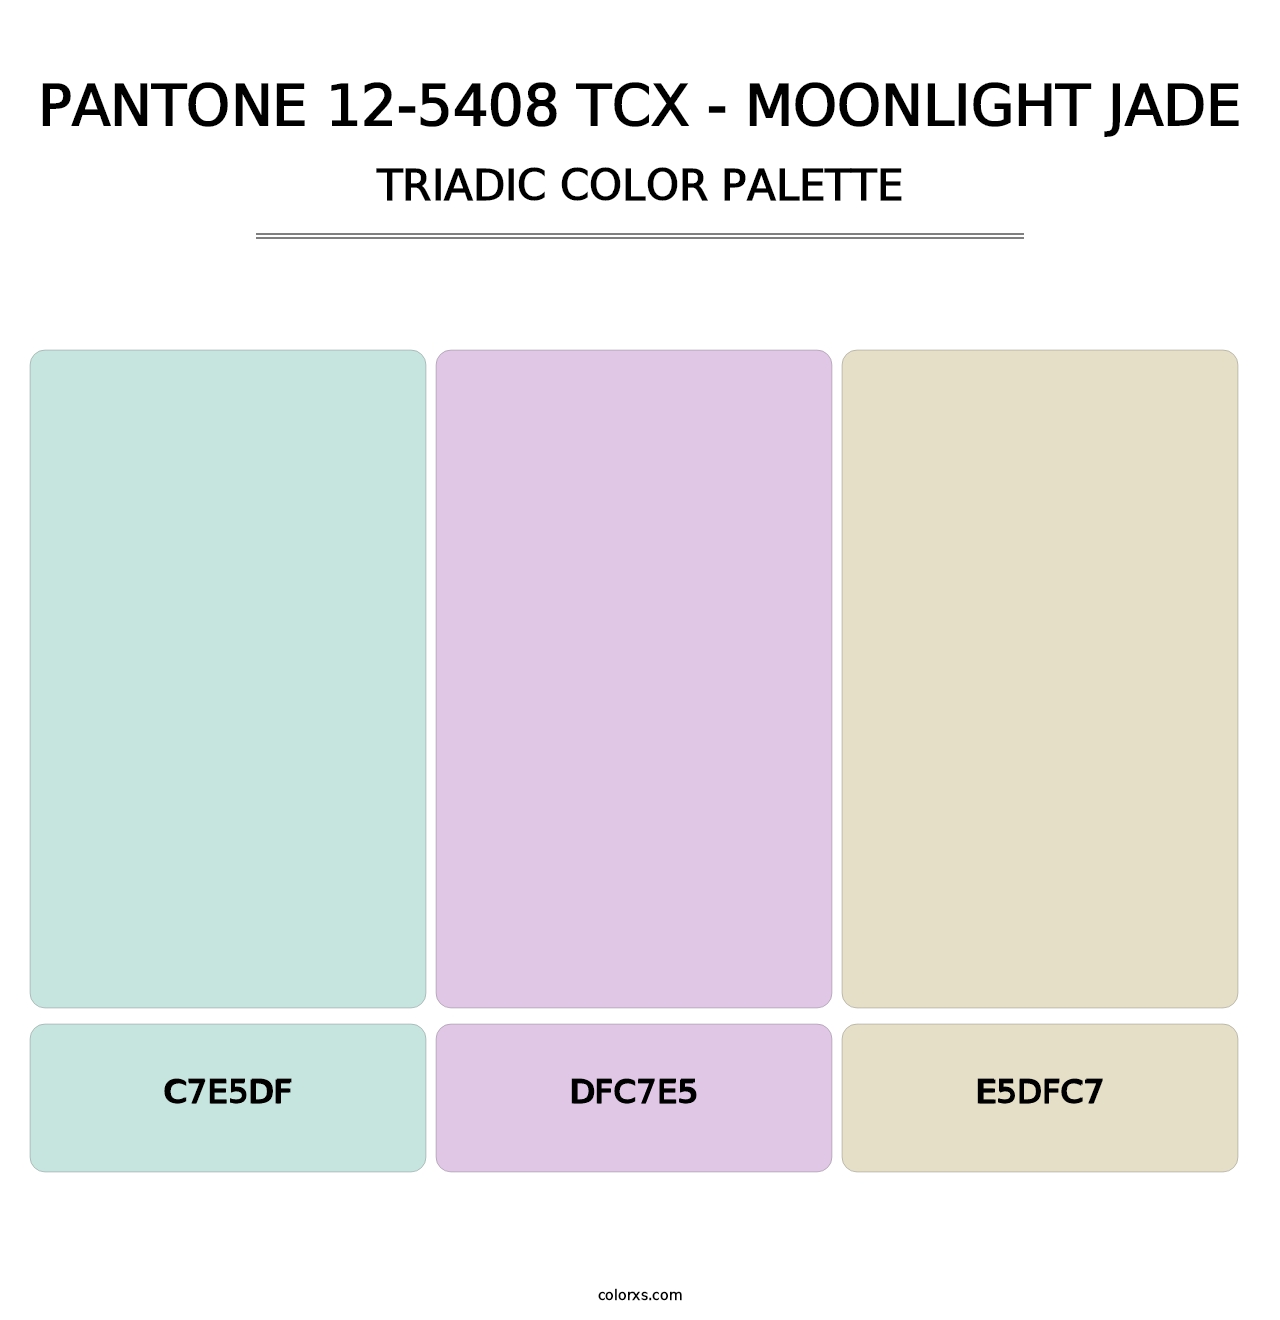 PANTONE 12-5408 TCX - Moonlight Jade - Triadic Color Palette